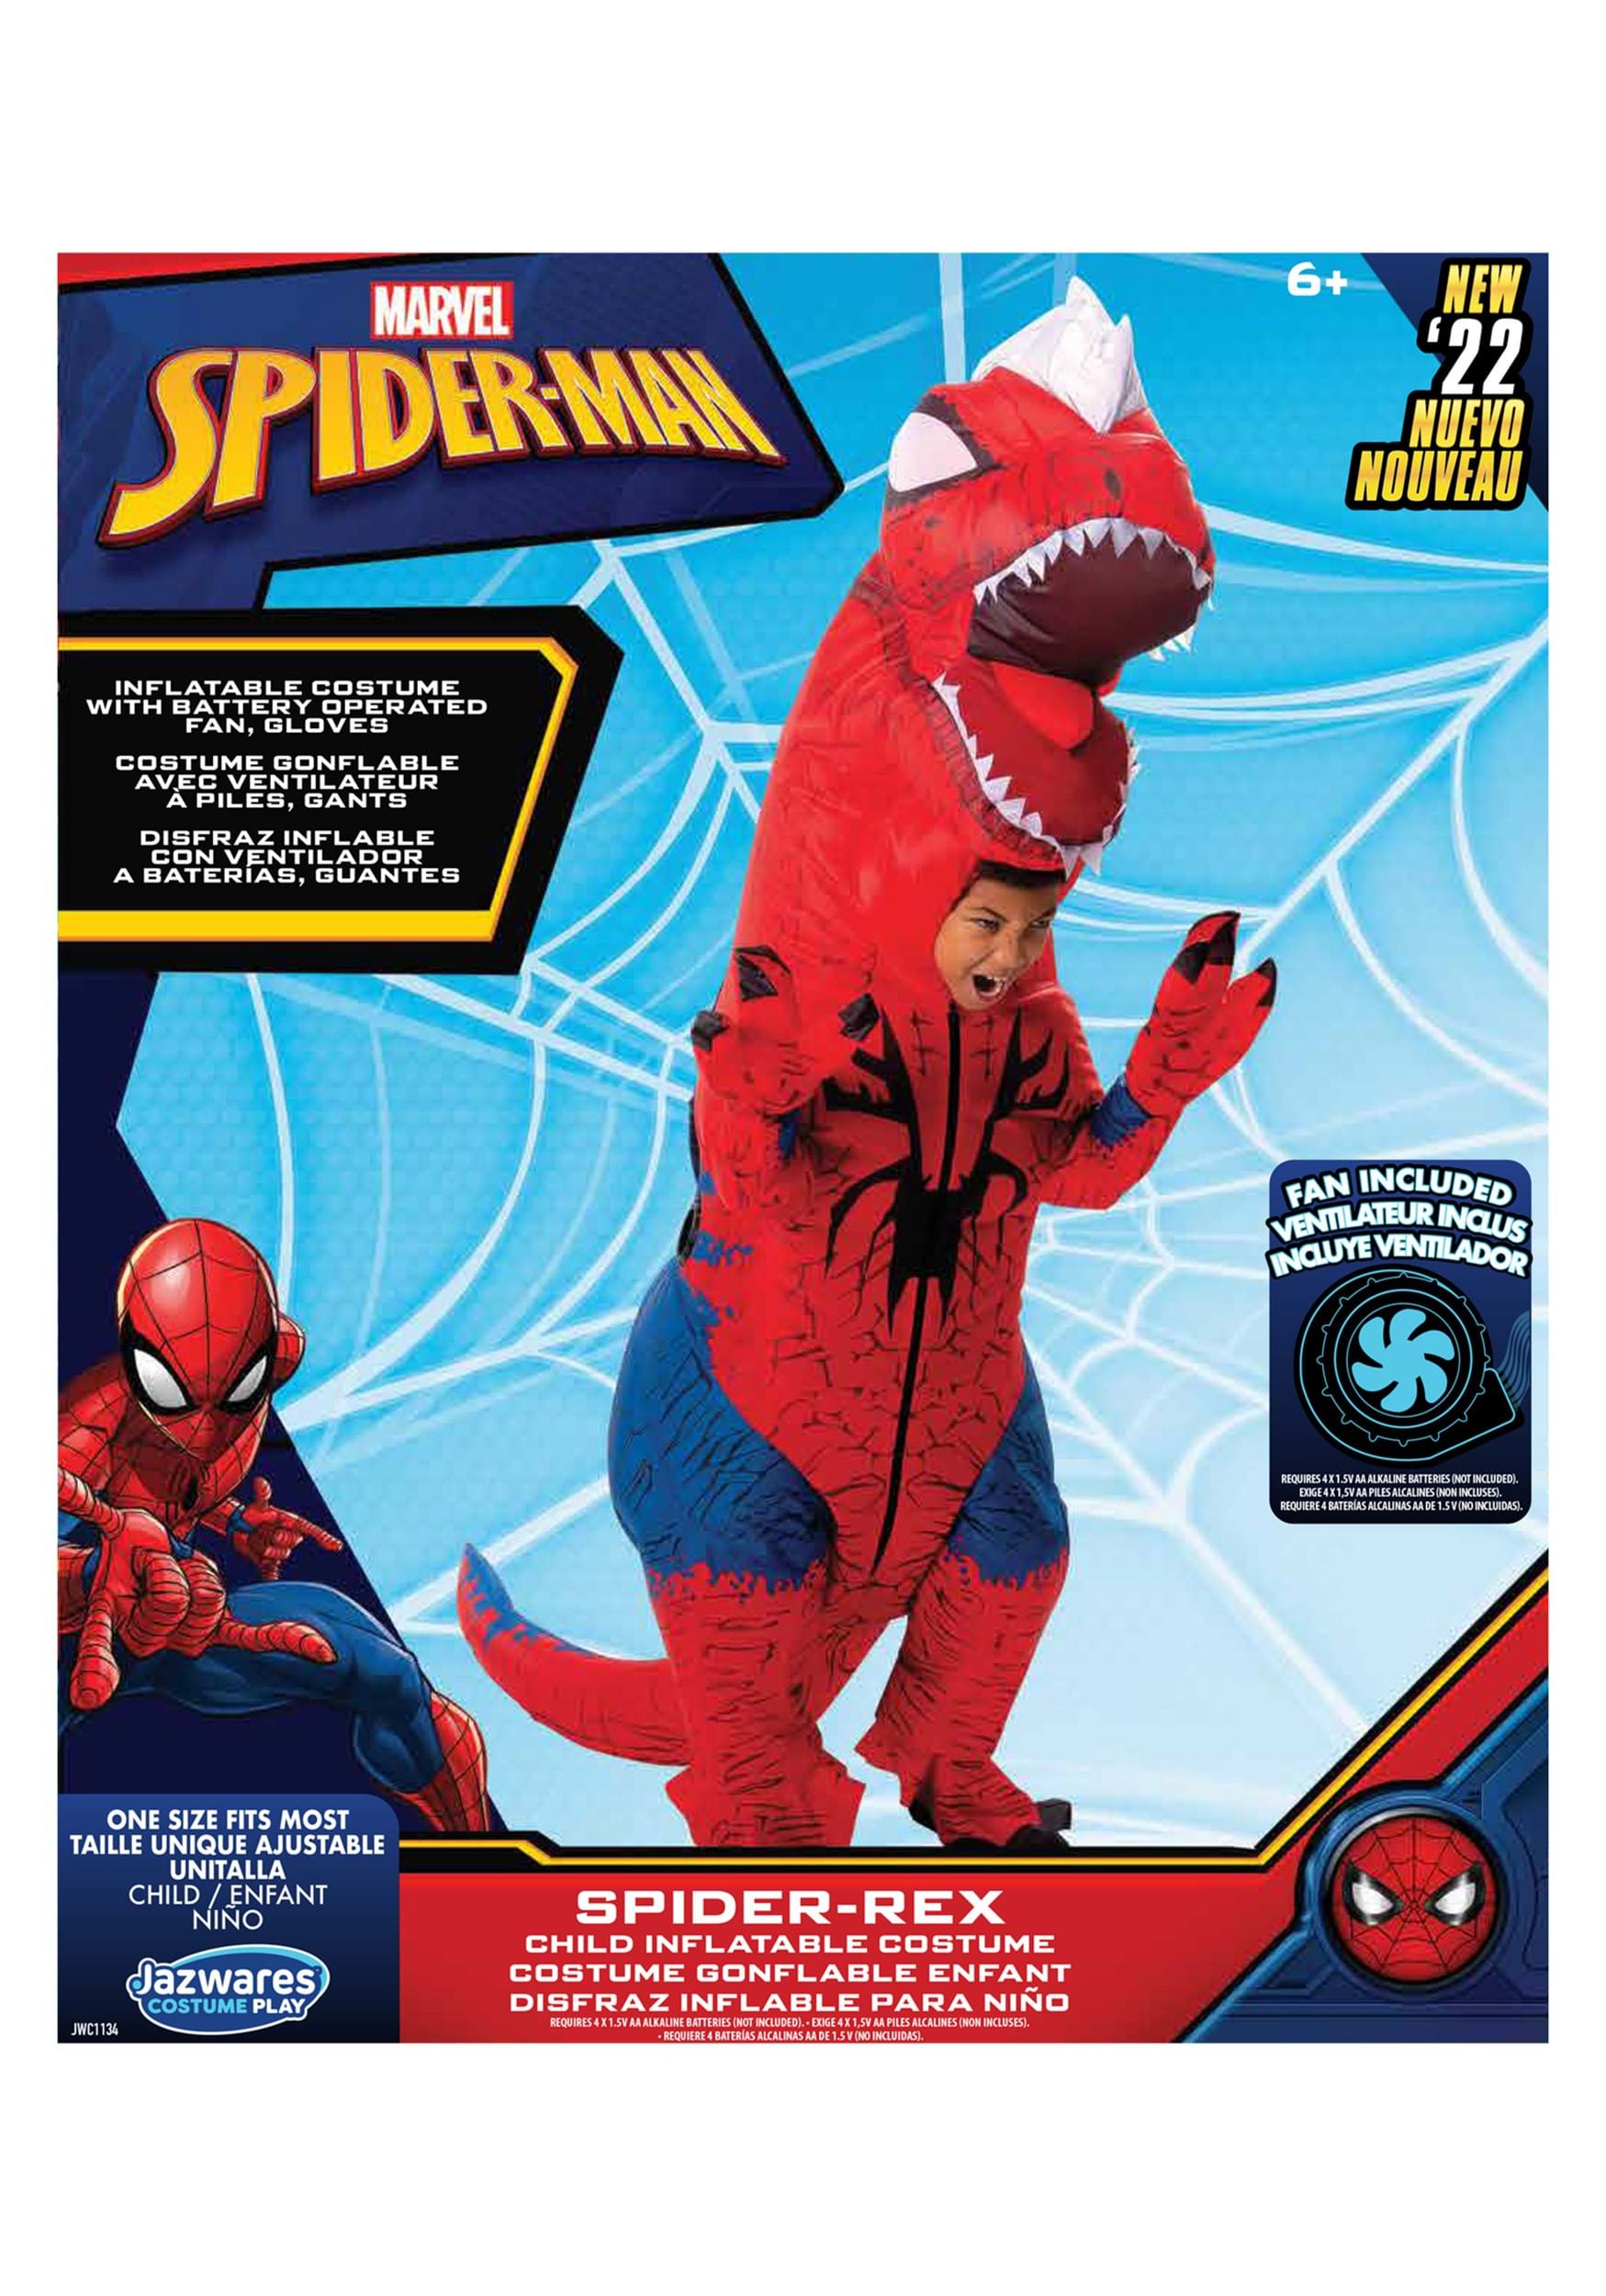 Inflatable Kid's Spider-Rex Costume , Dinosaur Costumes